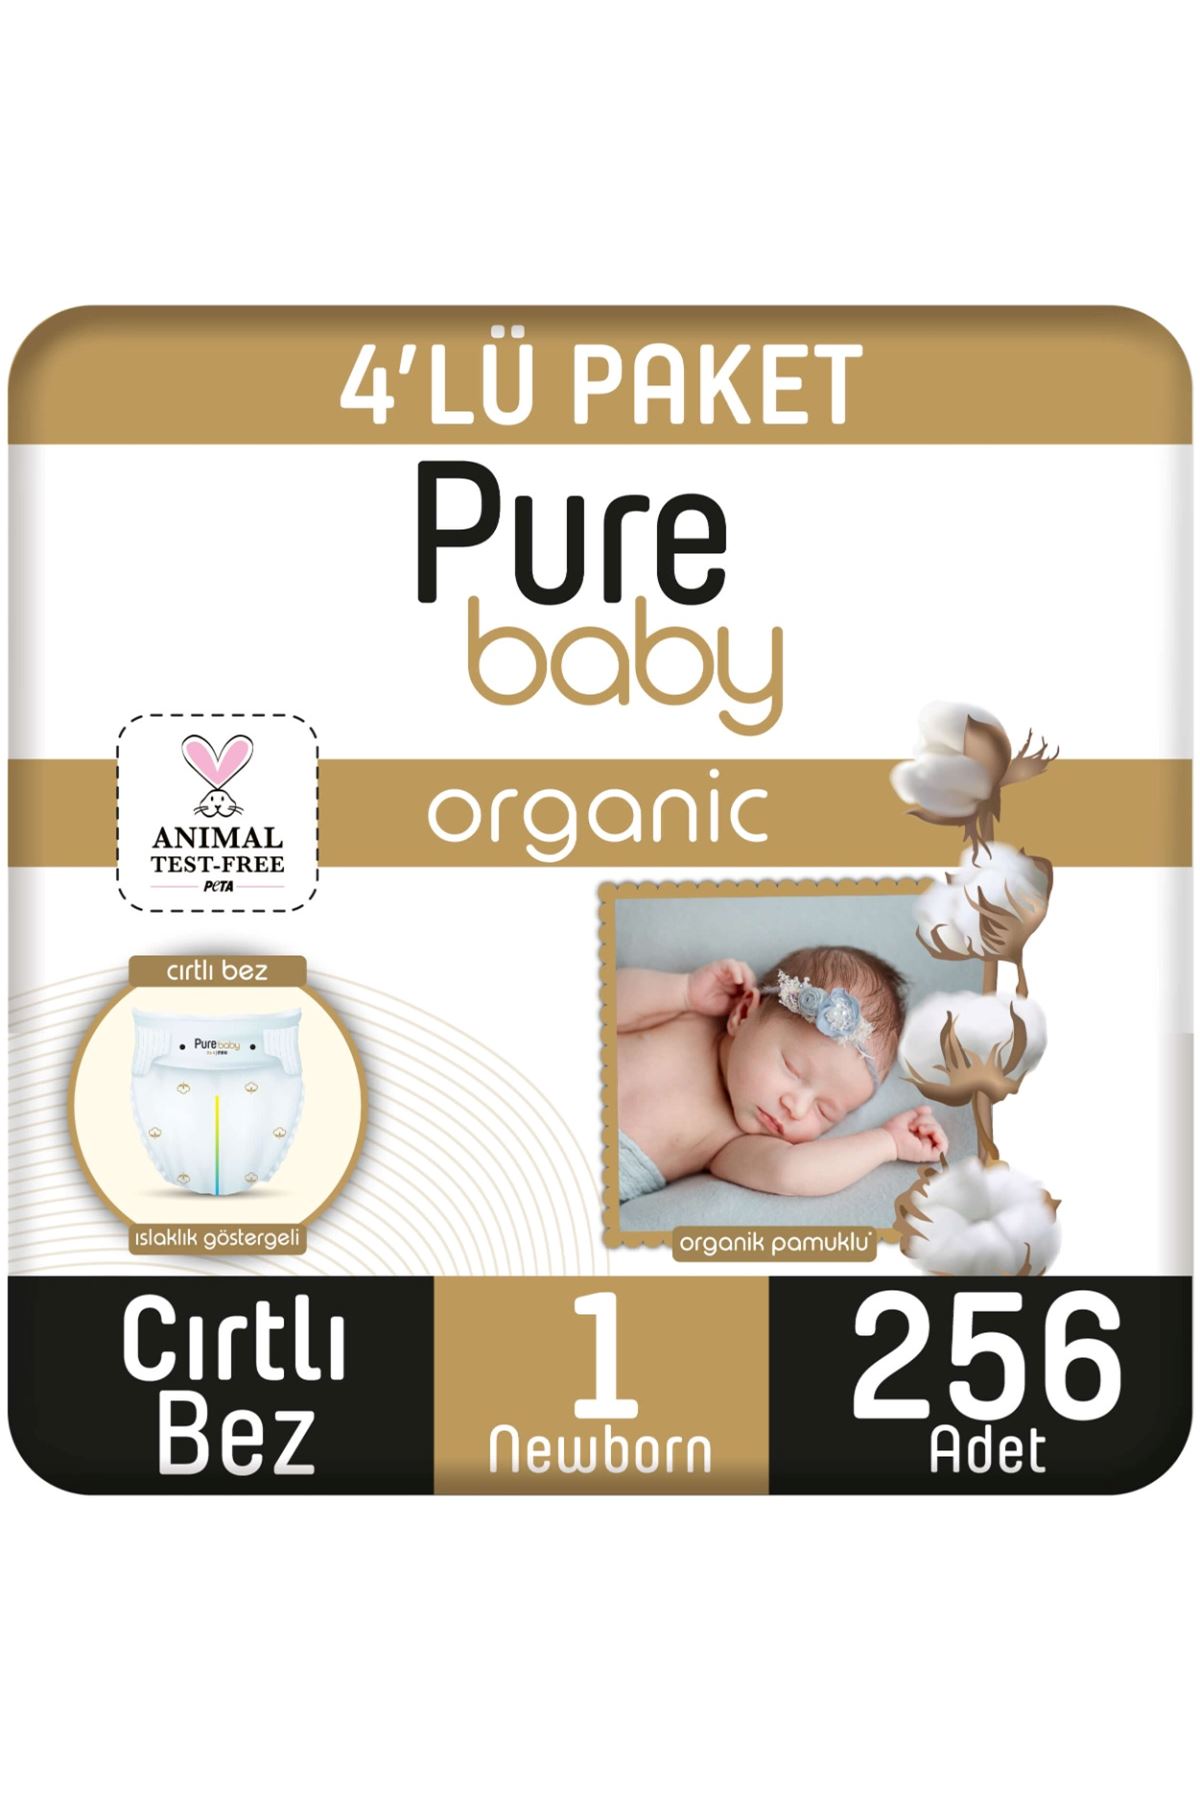 Pure Baby Organik Pamuklu Cırtlı Bez 4'Lü Paket 1 Numara Yenidogan 256 Adet